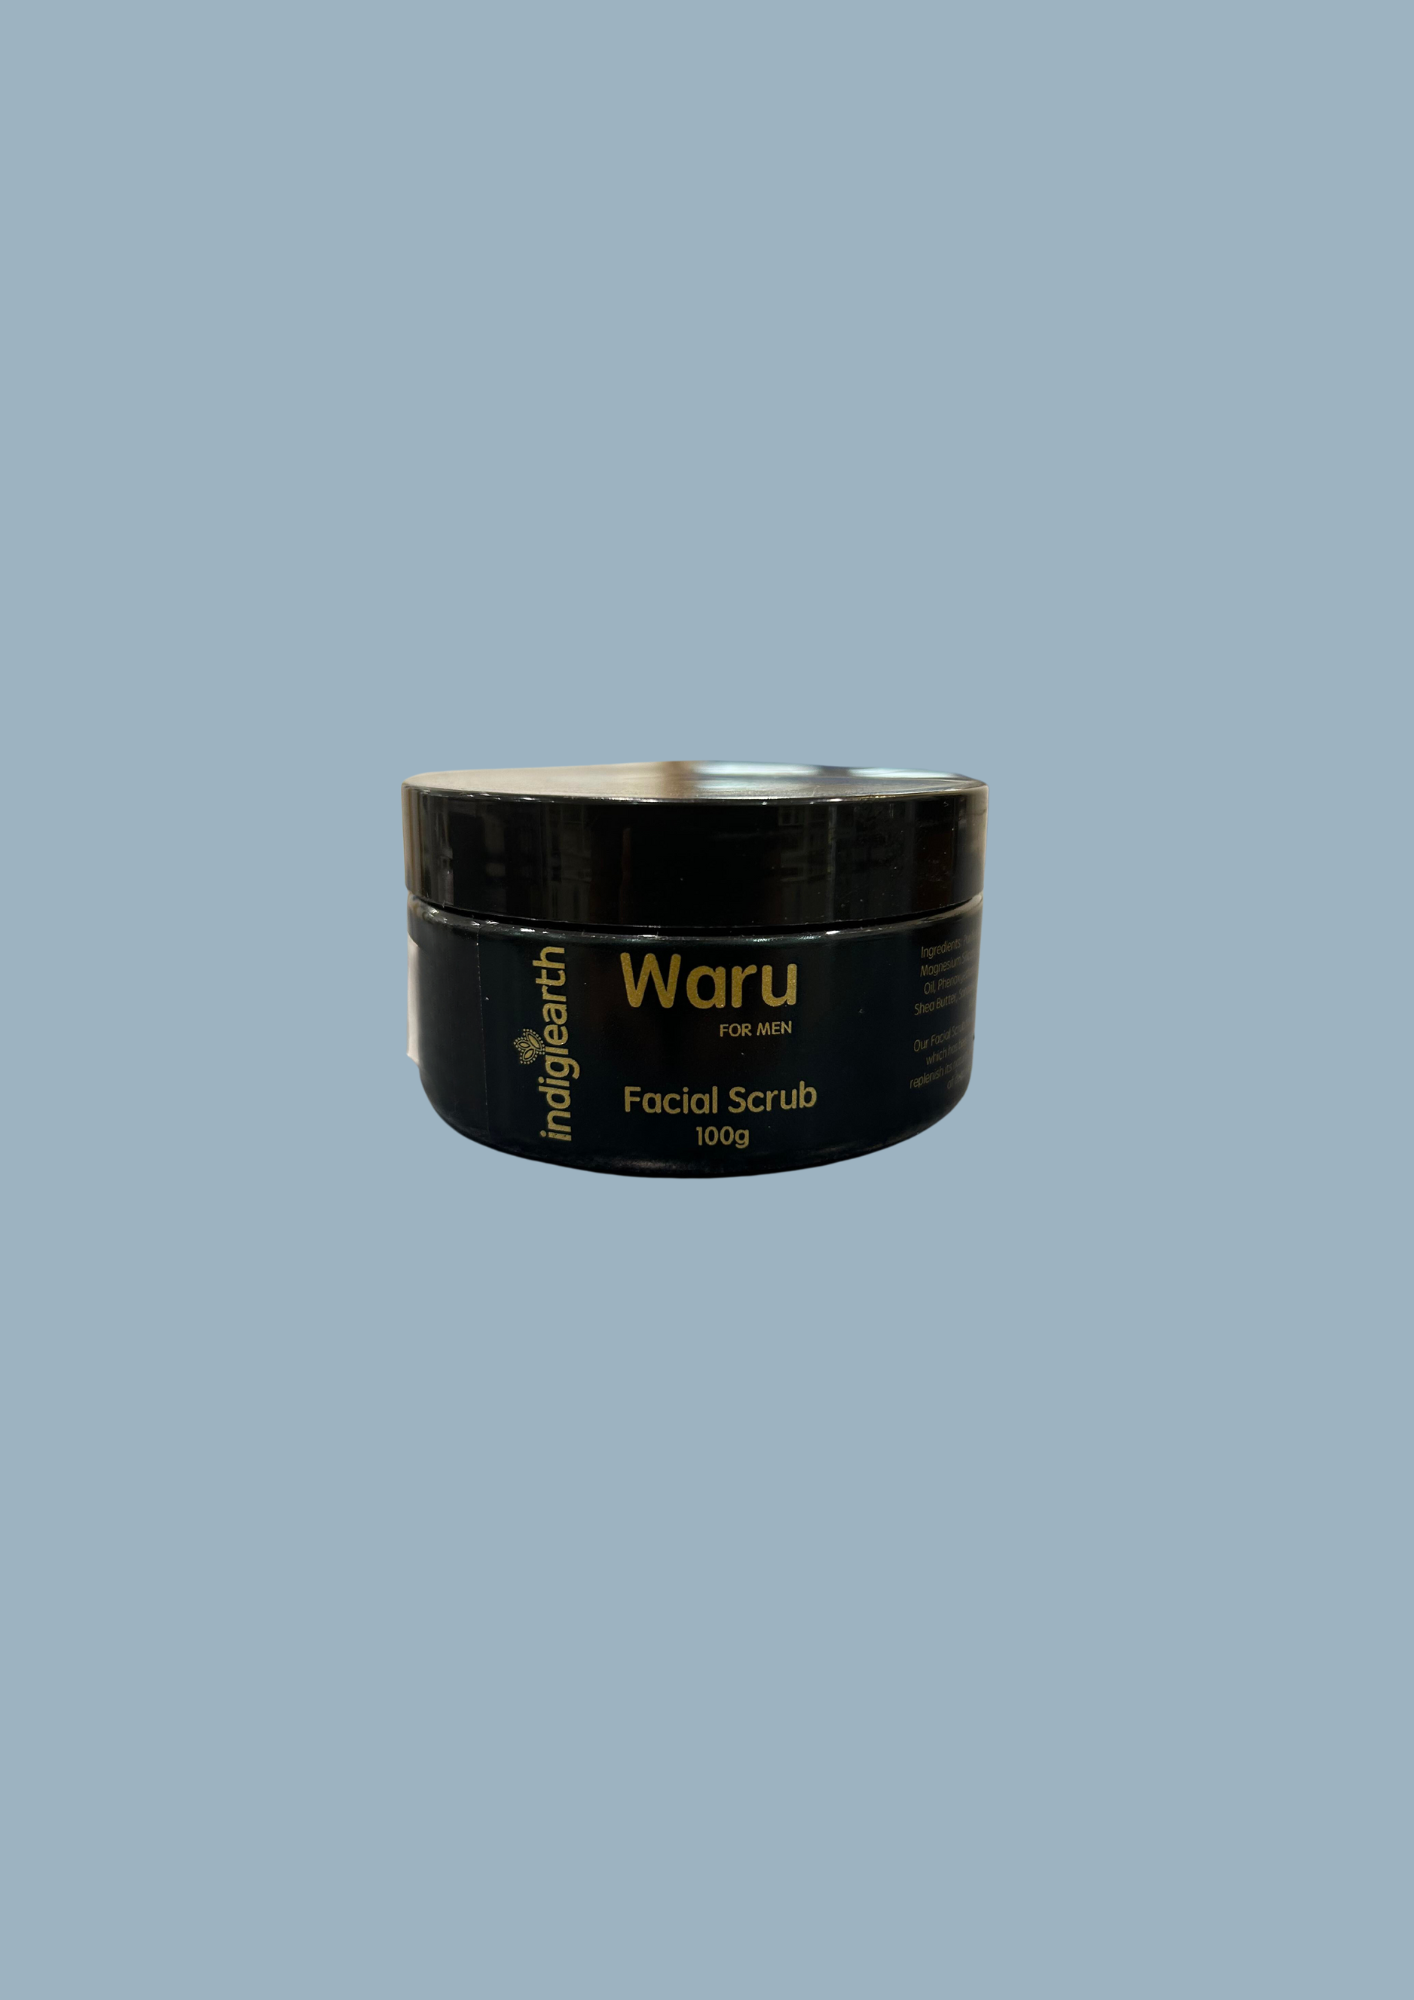 IndigiEarth - Waru for Men Facial Scrub 100g